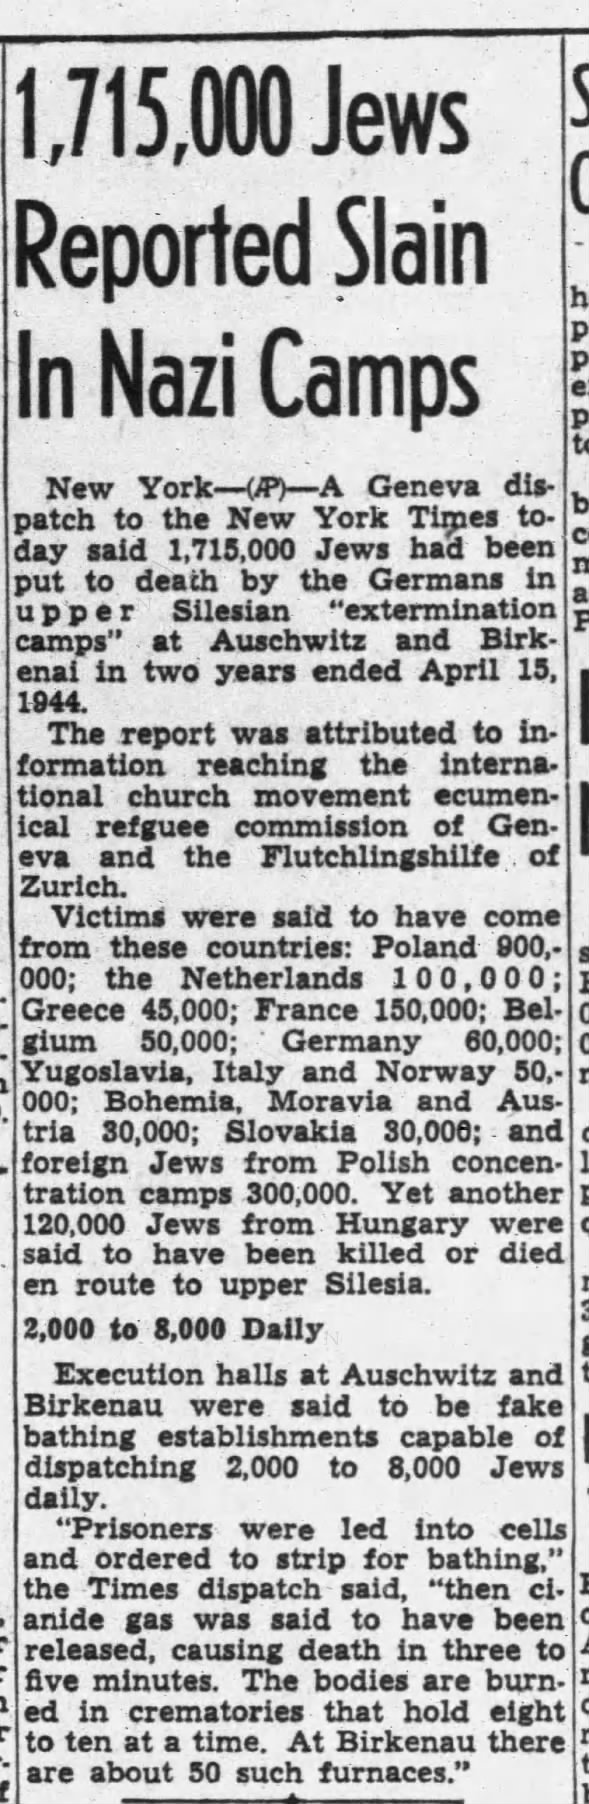 1,715,000 Jews Reported Slain in Nazi Camps